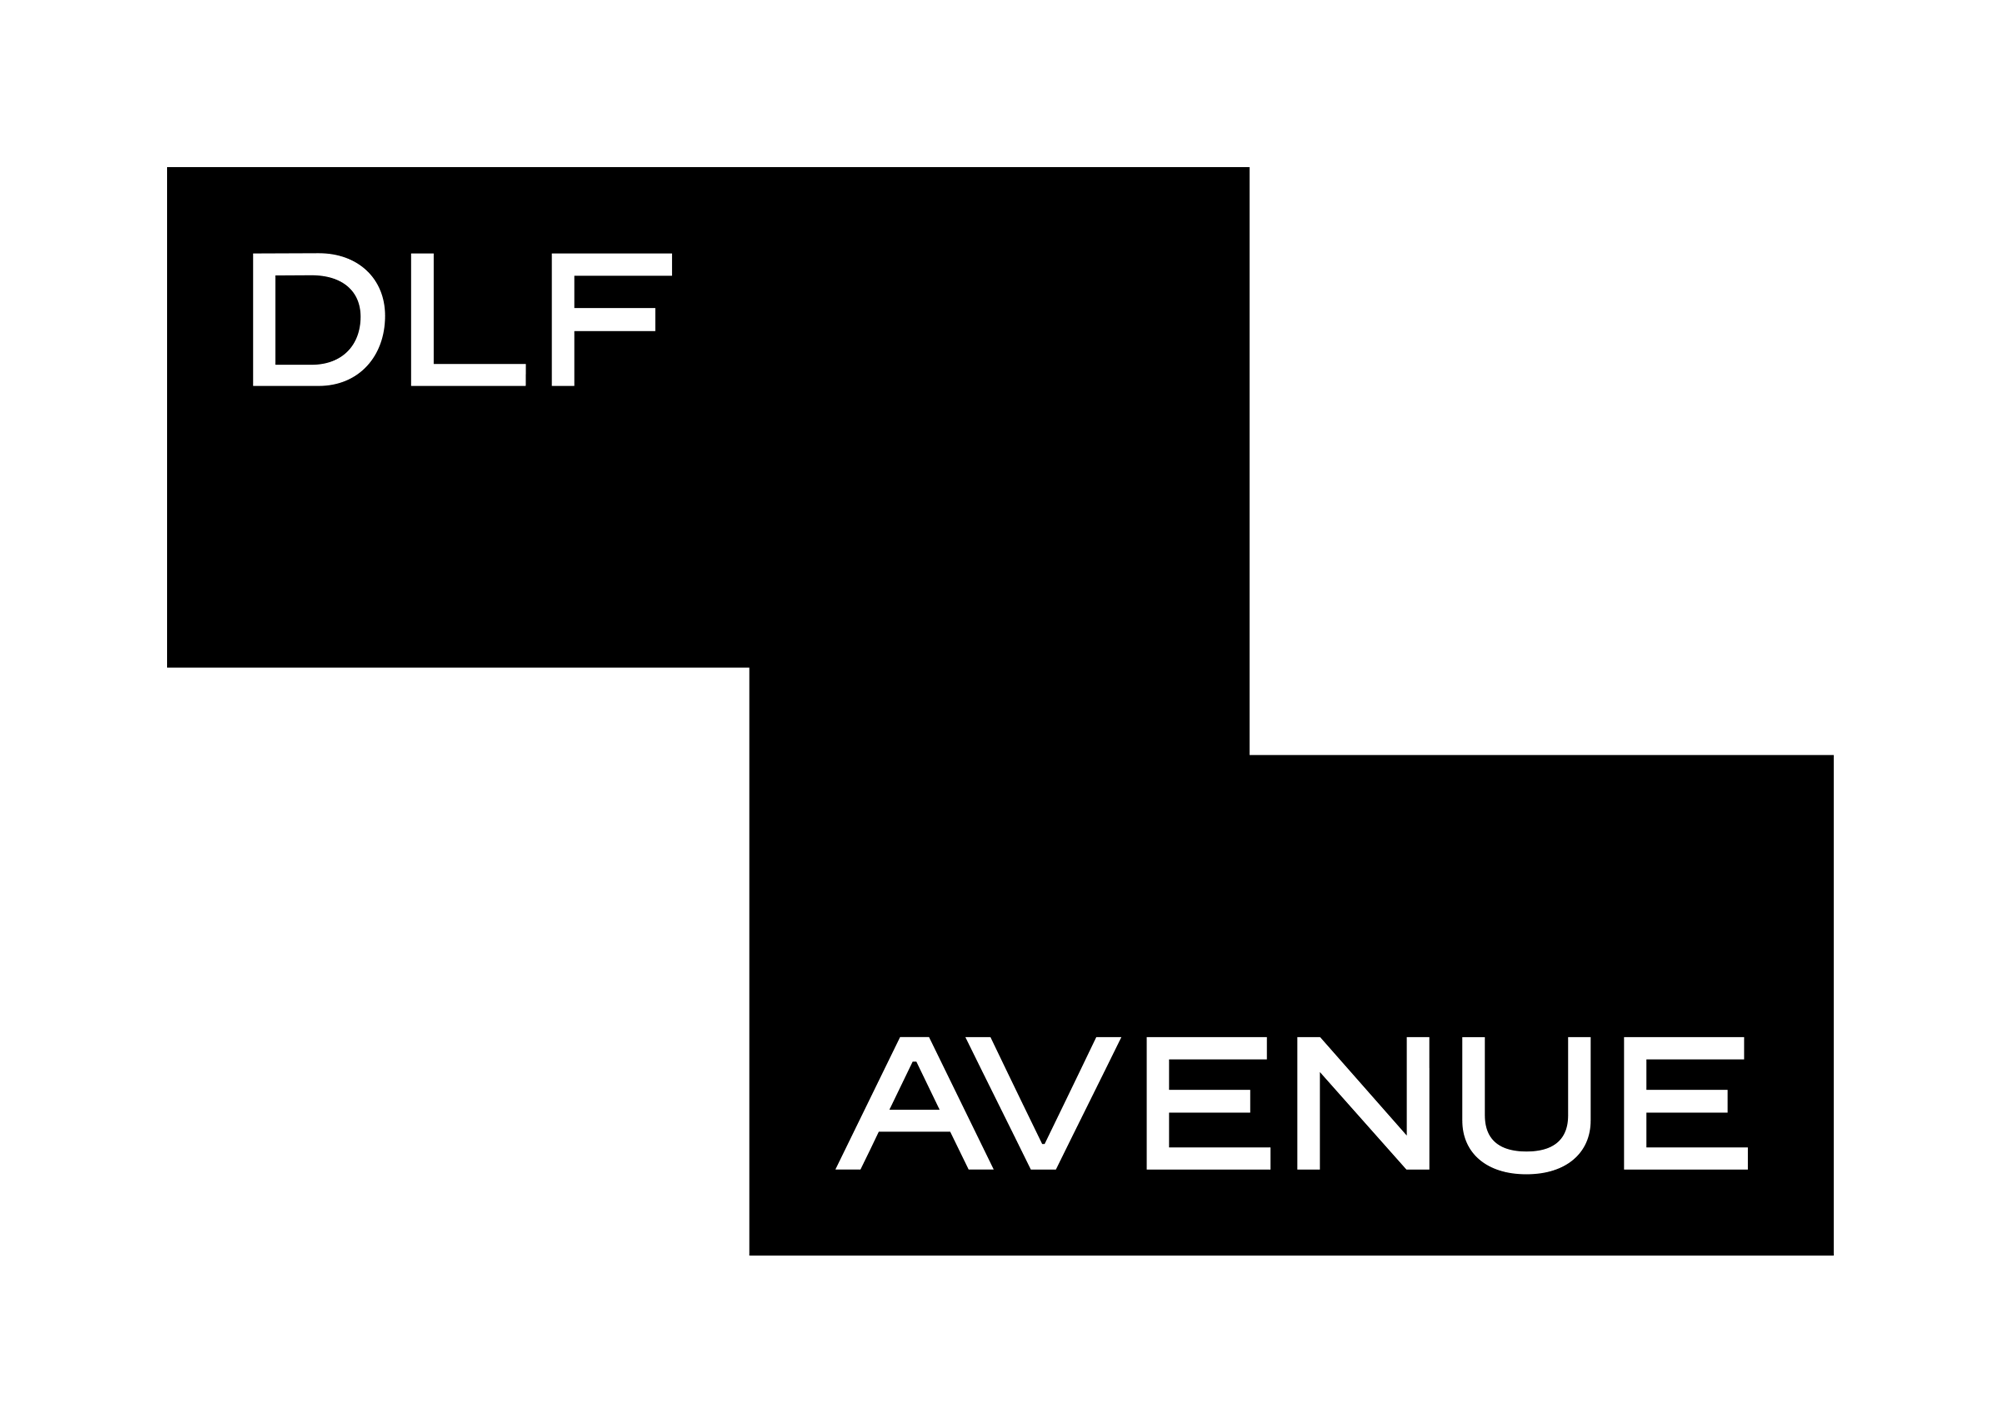 New Logo and Identity for DLF Avenue by Wieden + Kennedy, Delhi